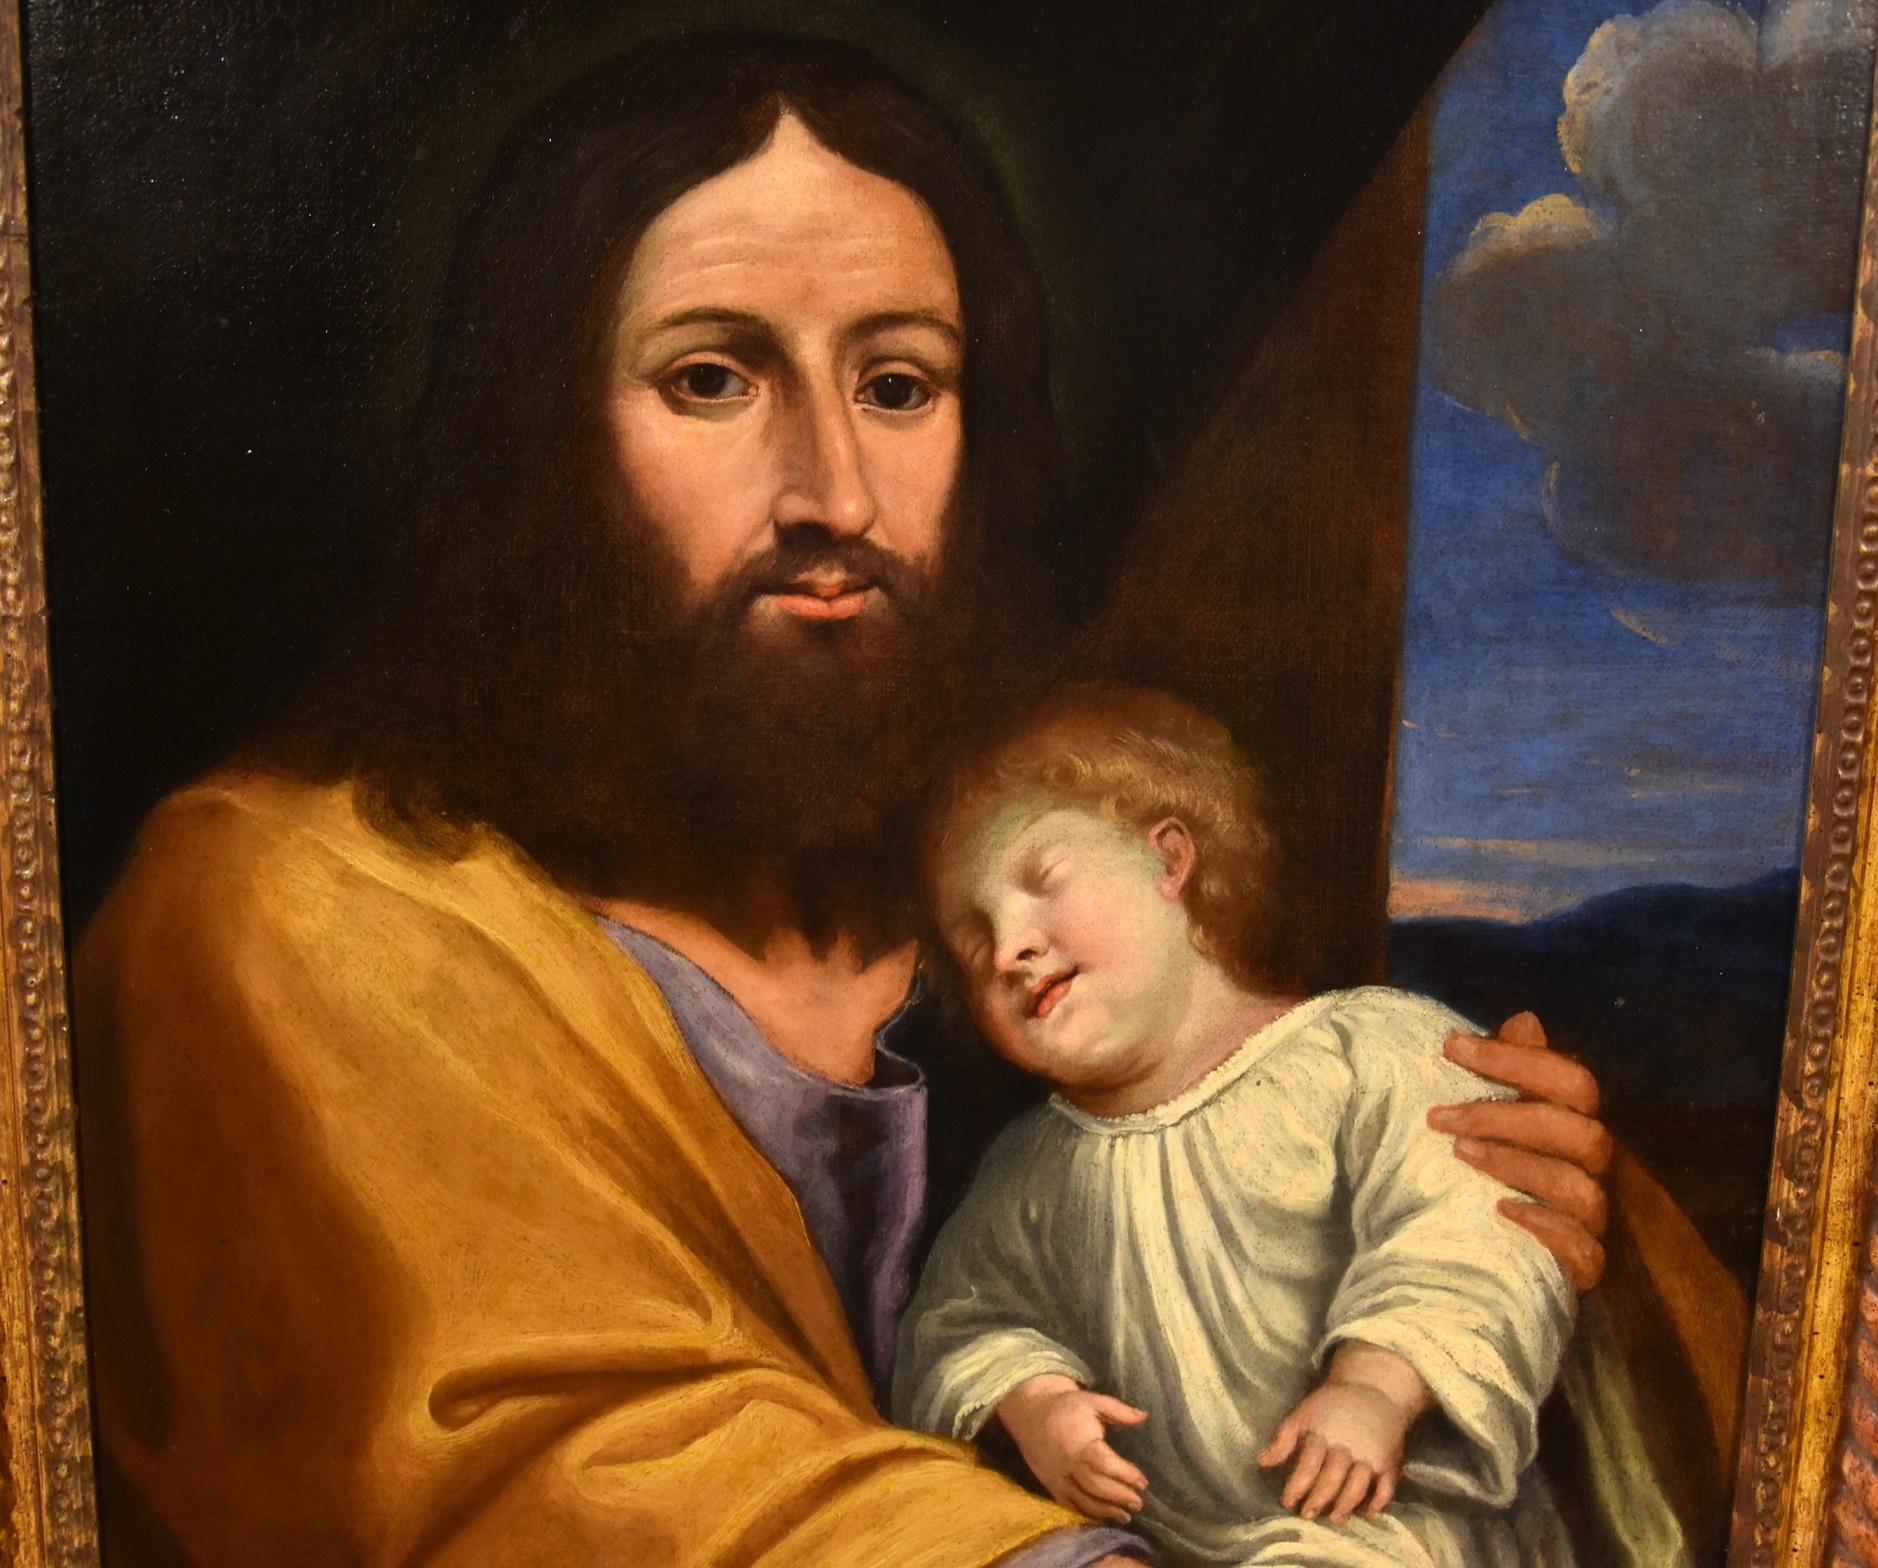 Jesus Sohn Salvi, Gemälde Öl auf Leinwand, alter Meister, 17. Jahrhundert, Italienisch, religiös im Angebot 6